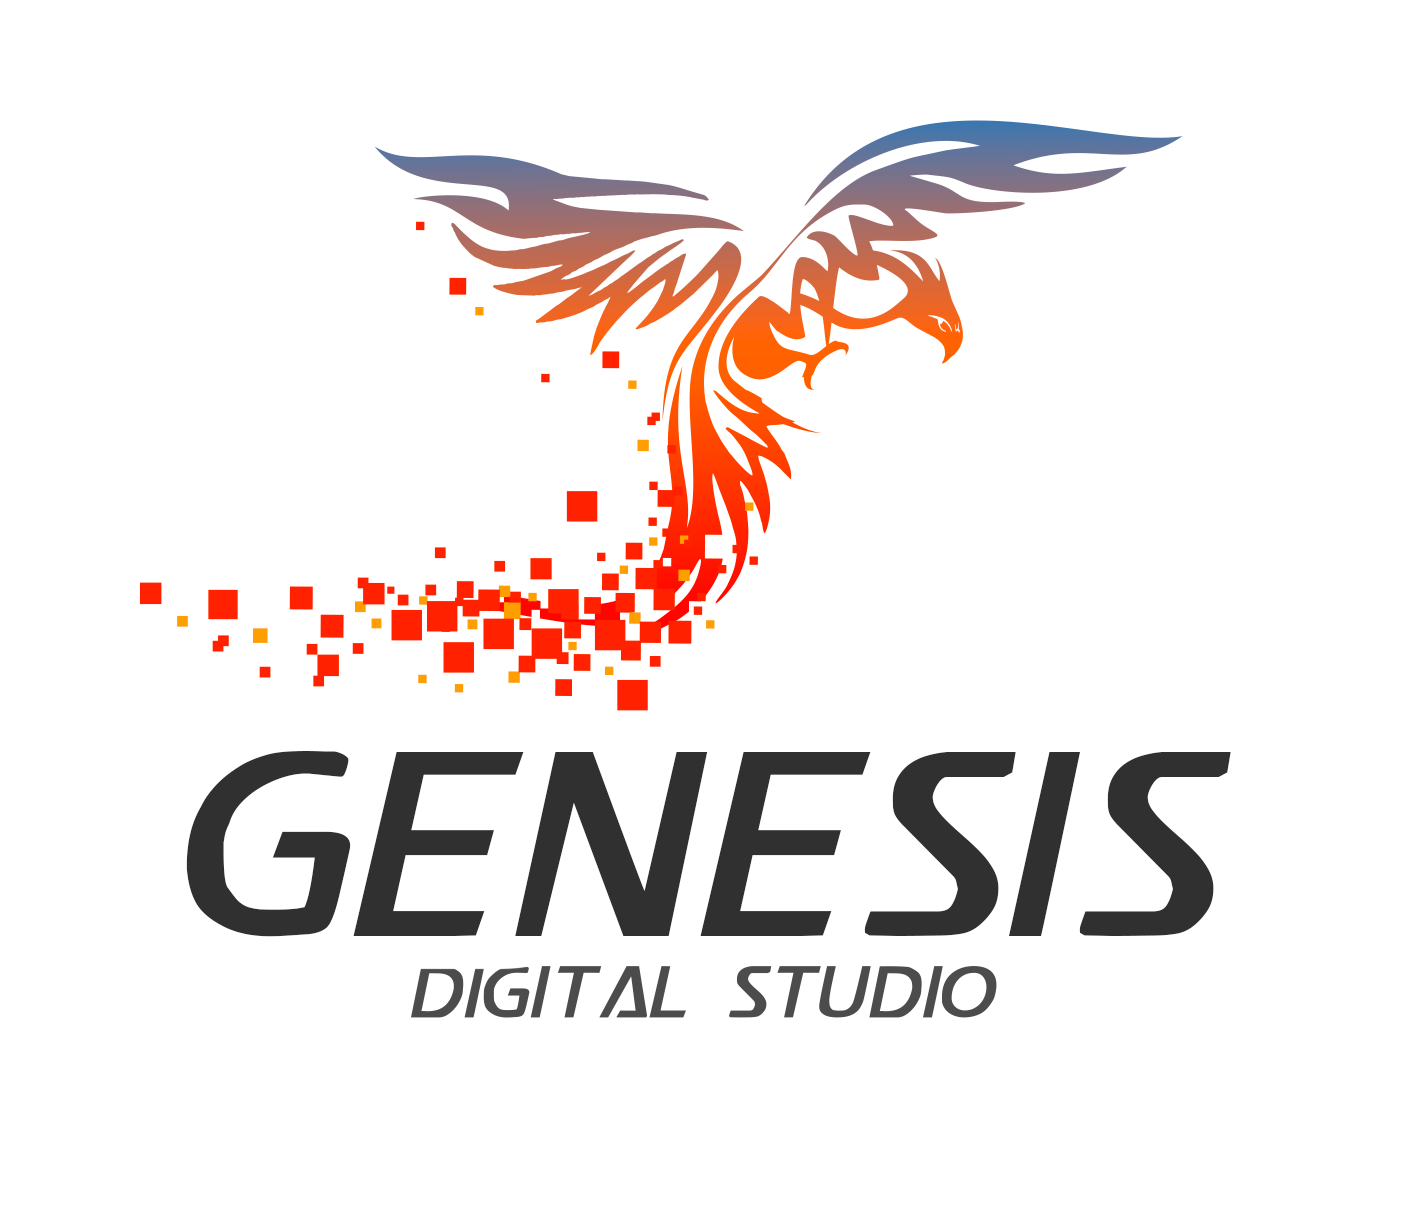 Digital Studio Genesis